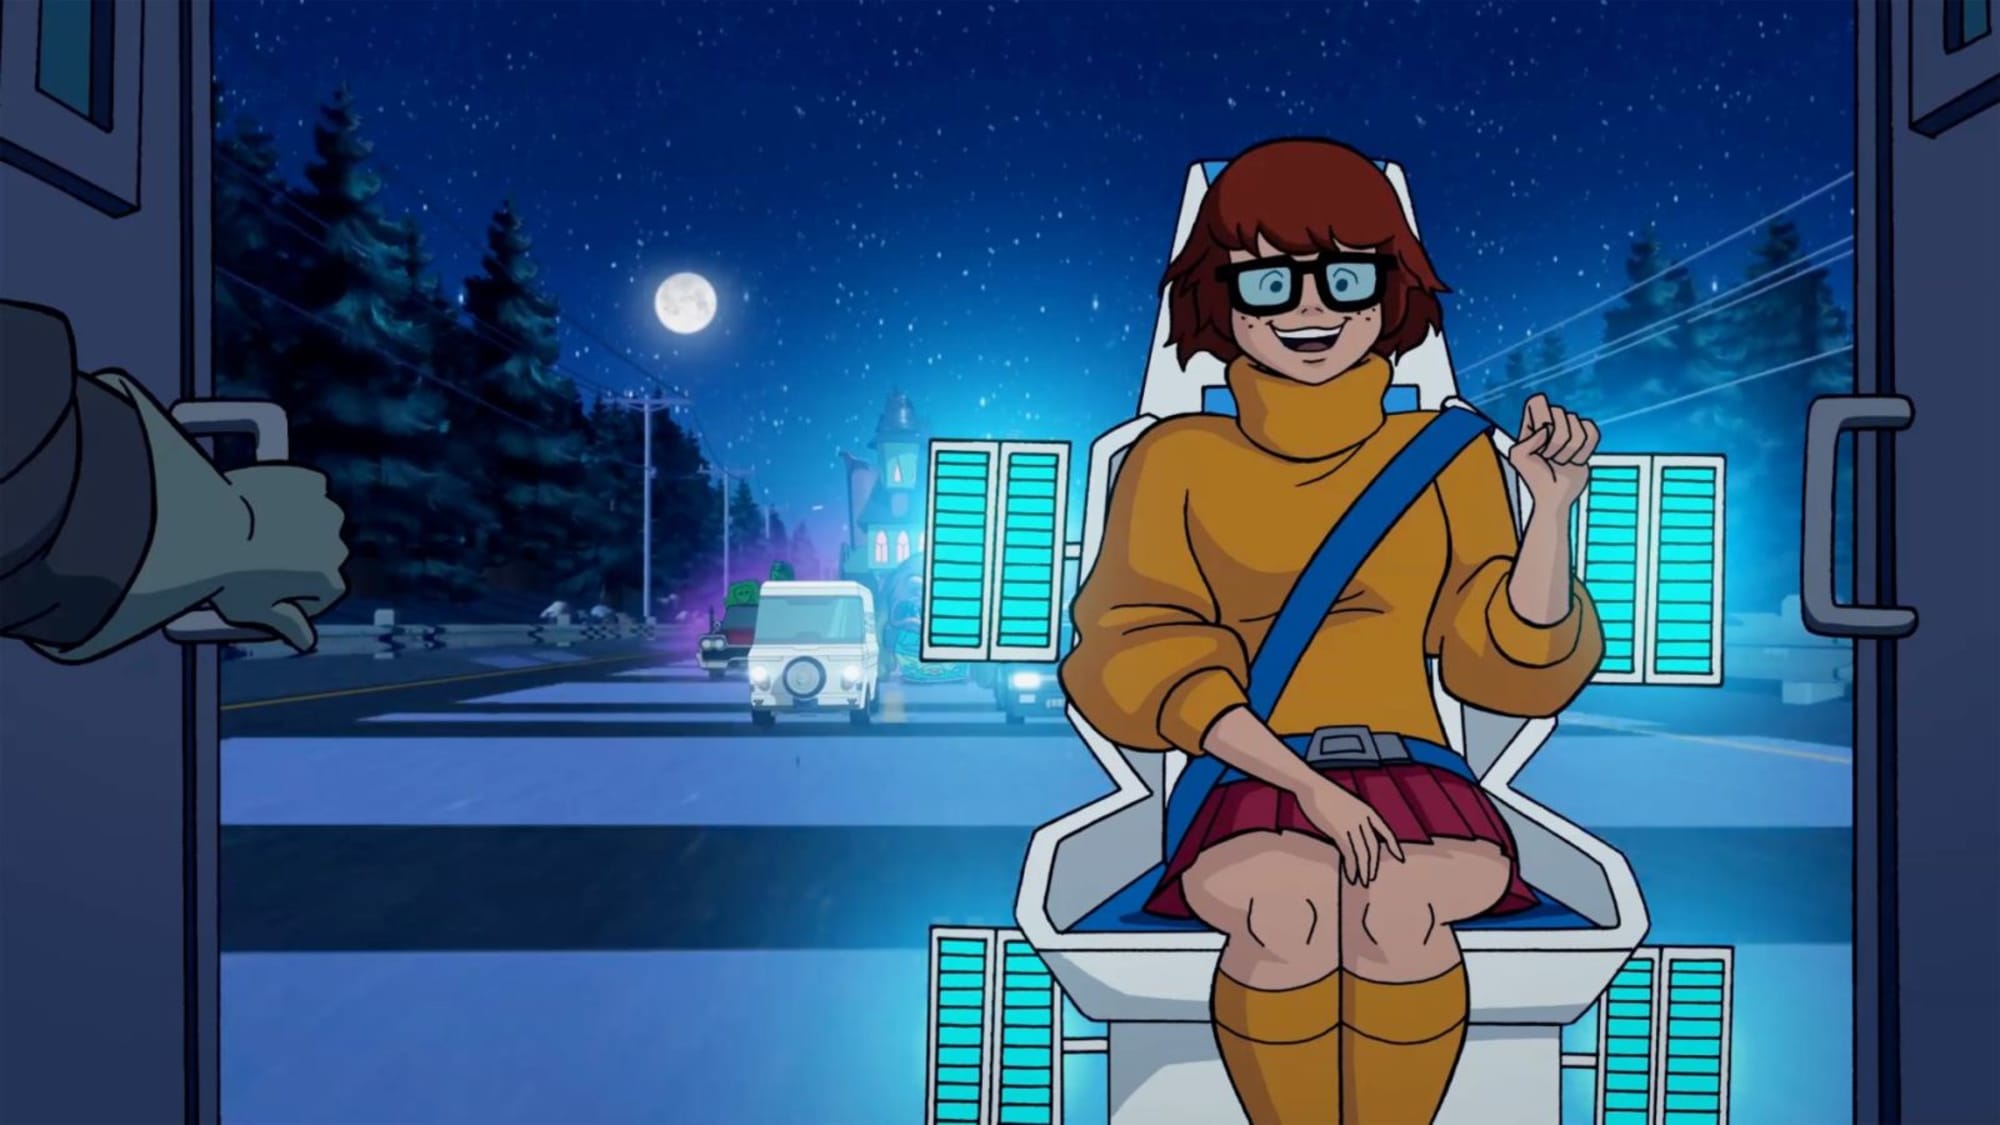 Daphne And Velma From Scooby Doo Origin Story Movie